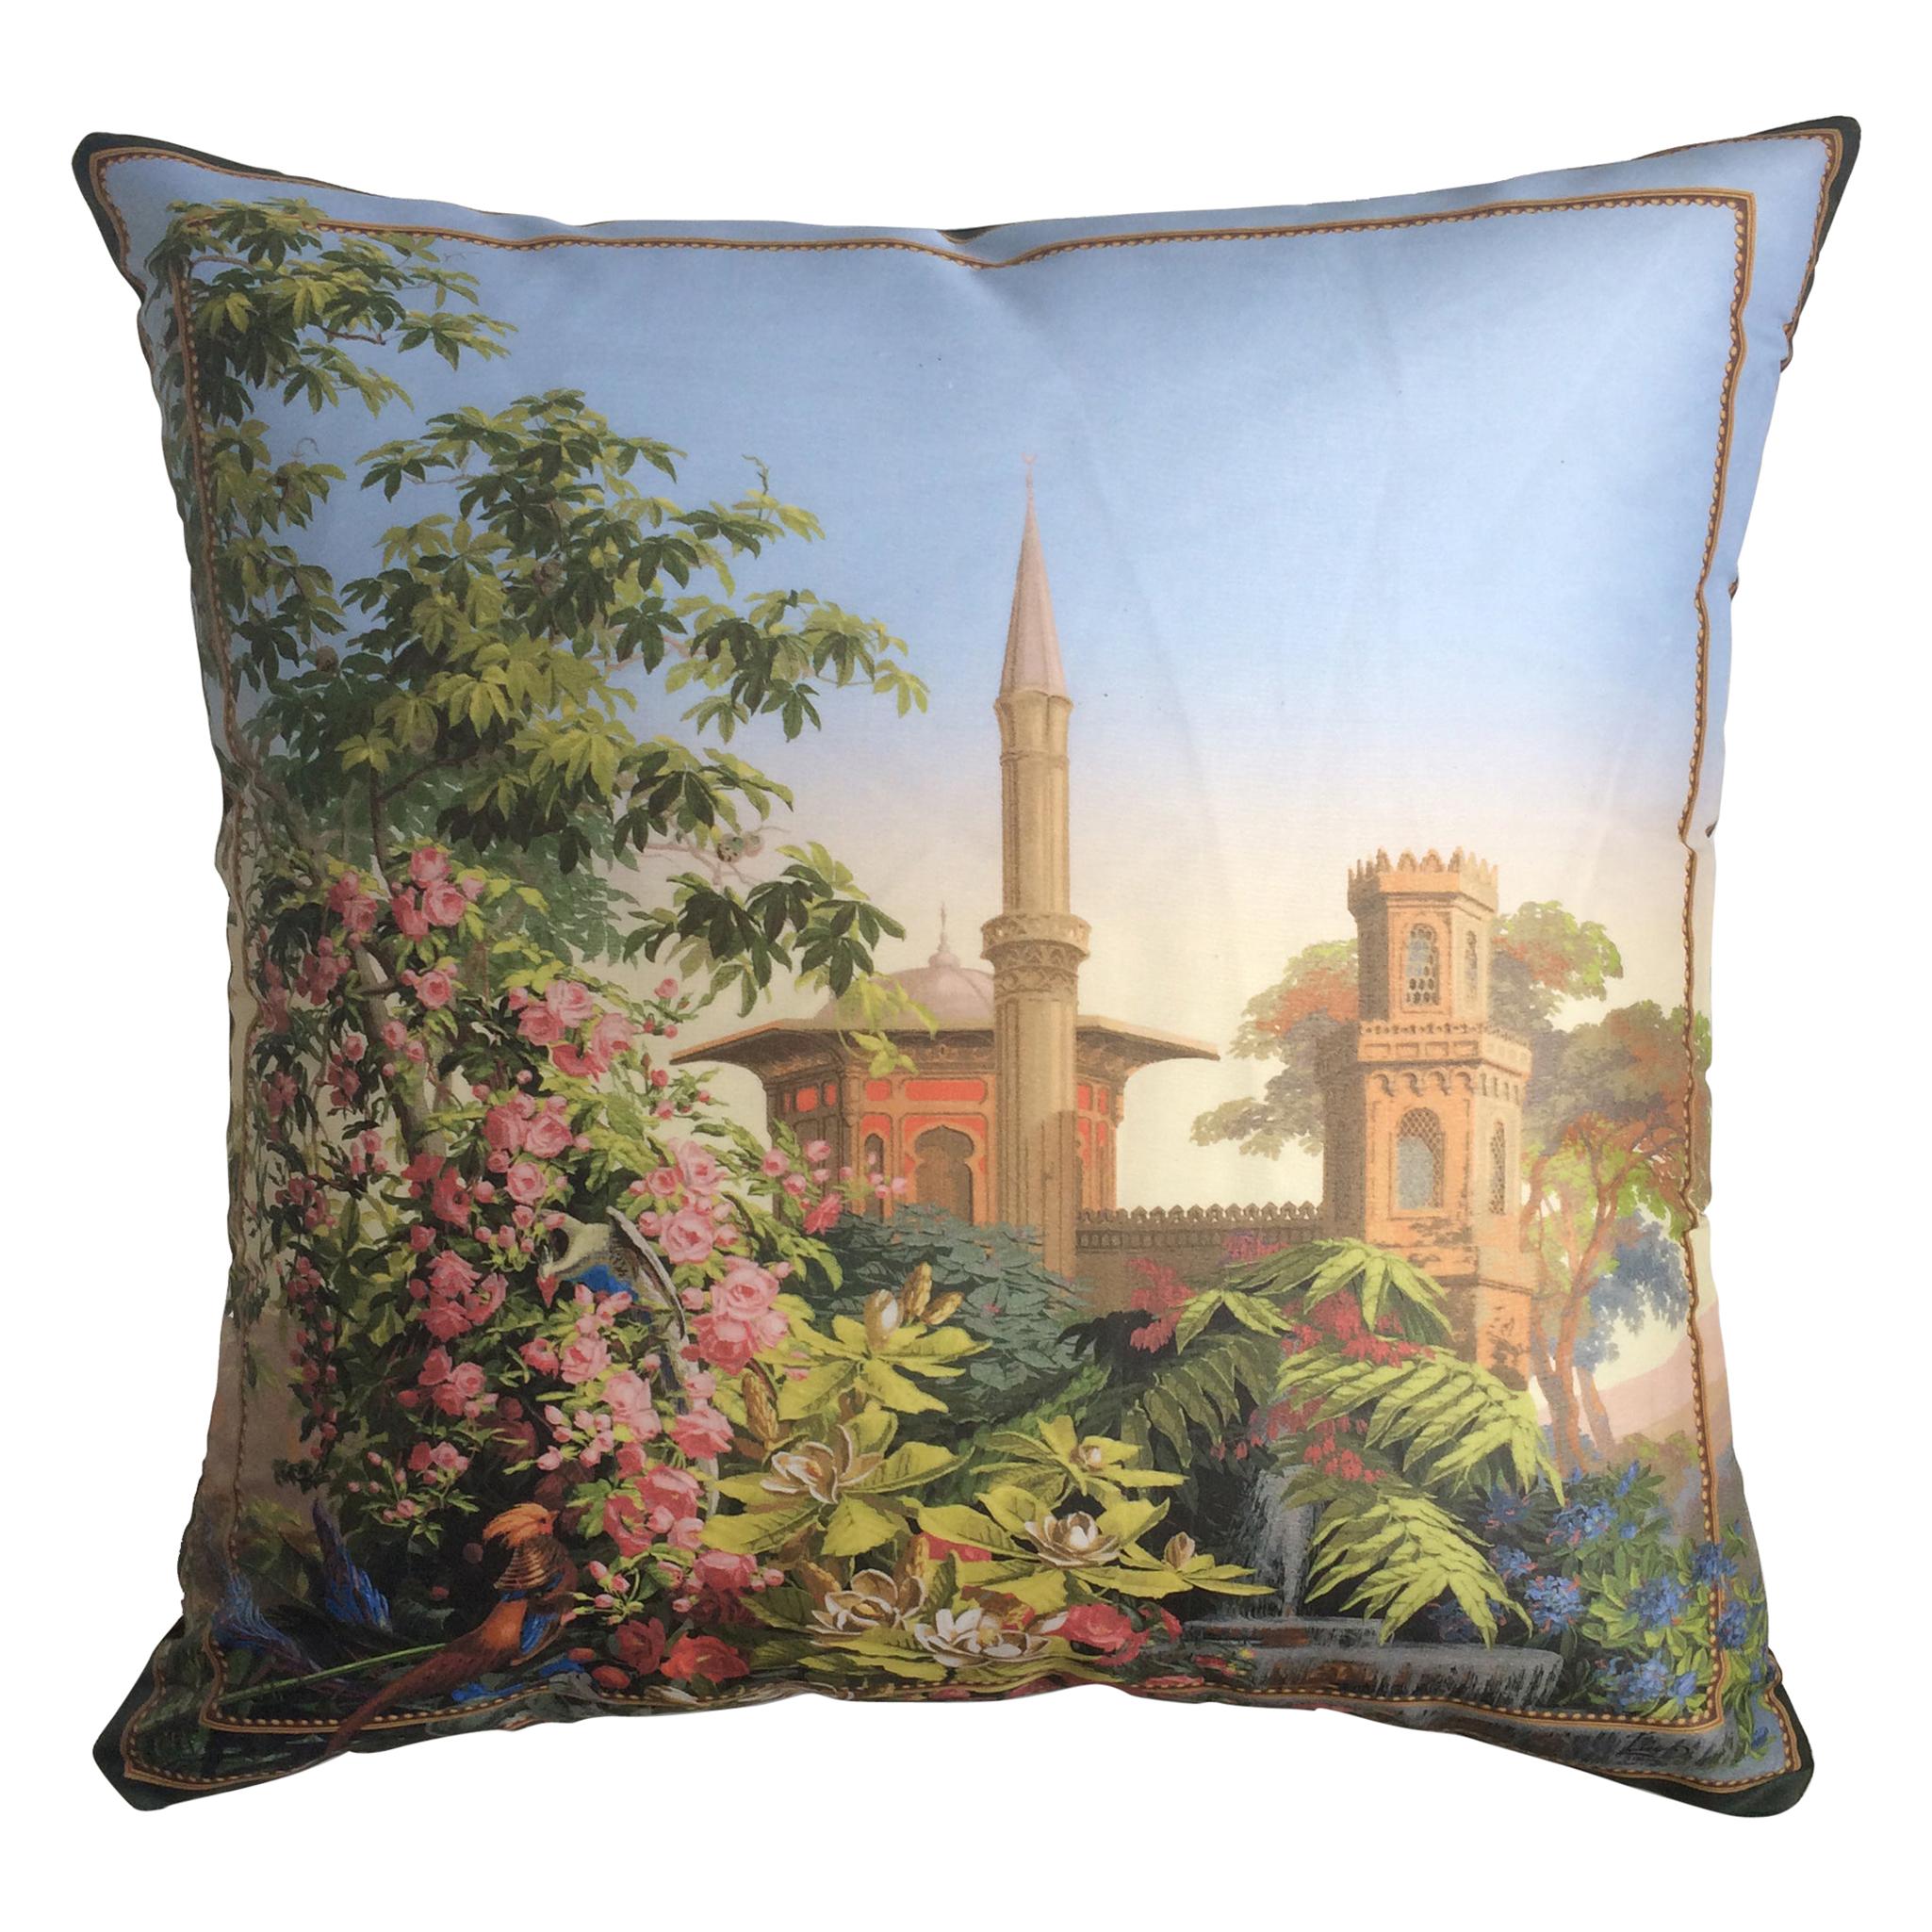 "El Dorado Bosforo" Silk Throw Pillow in Polychrome by Zuber For Sale